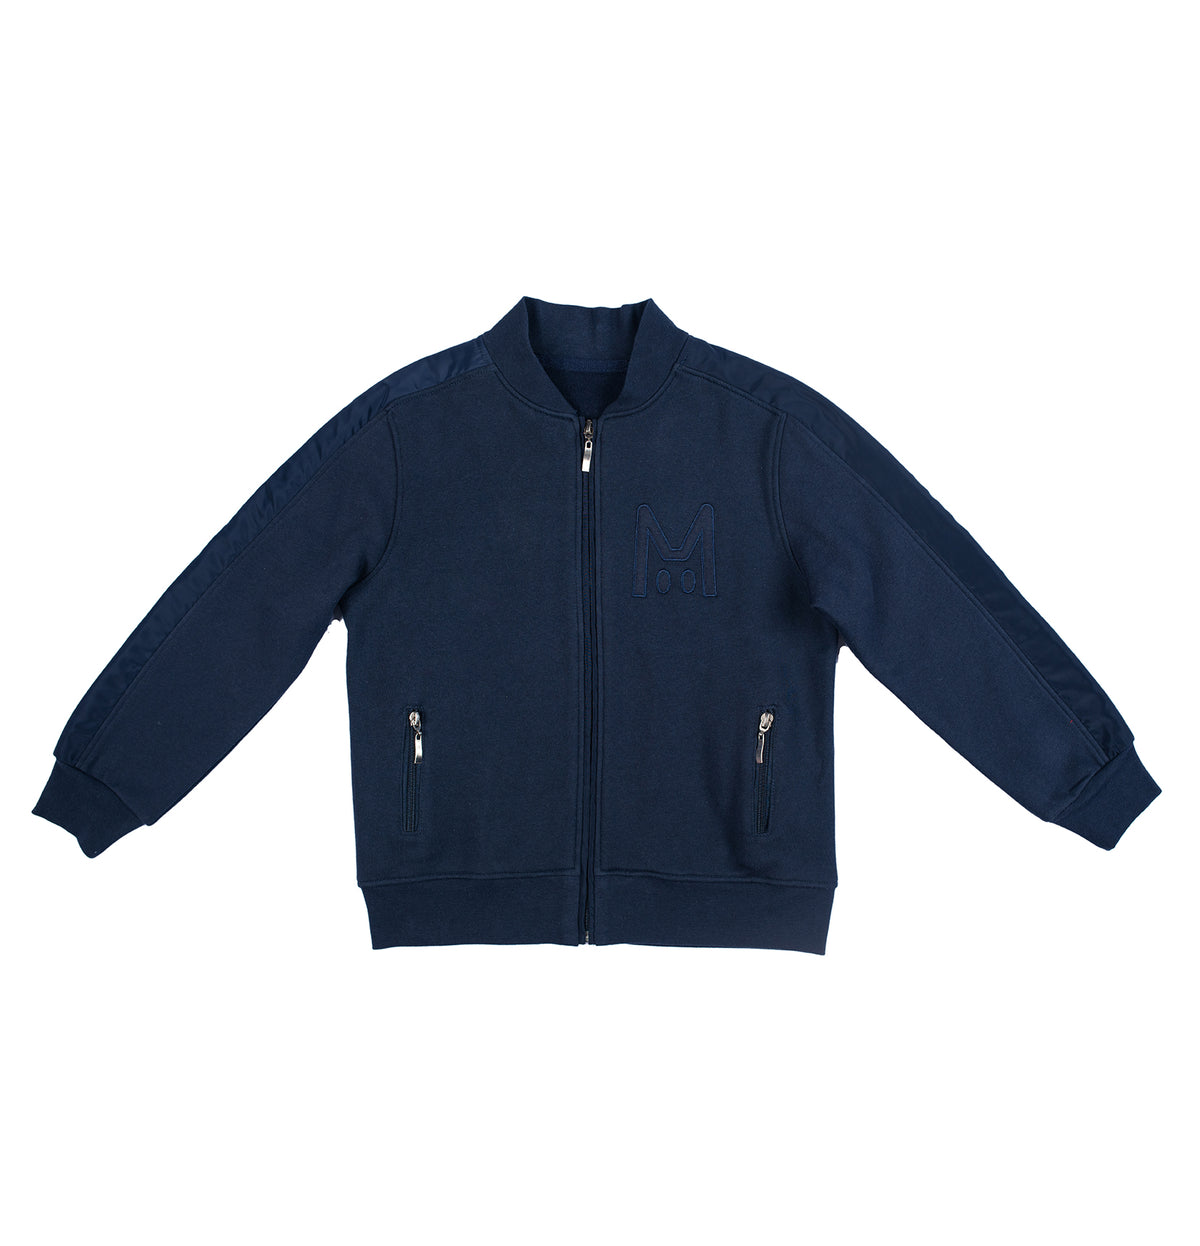 Boy blue jacket with pockets by Pompelo